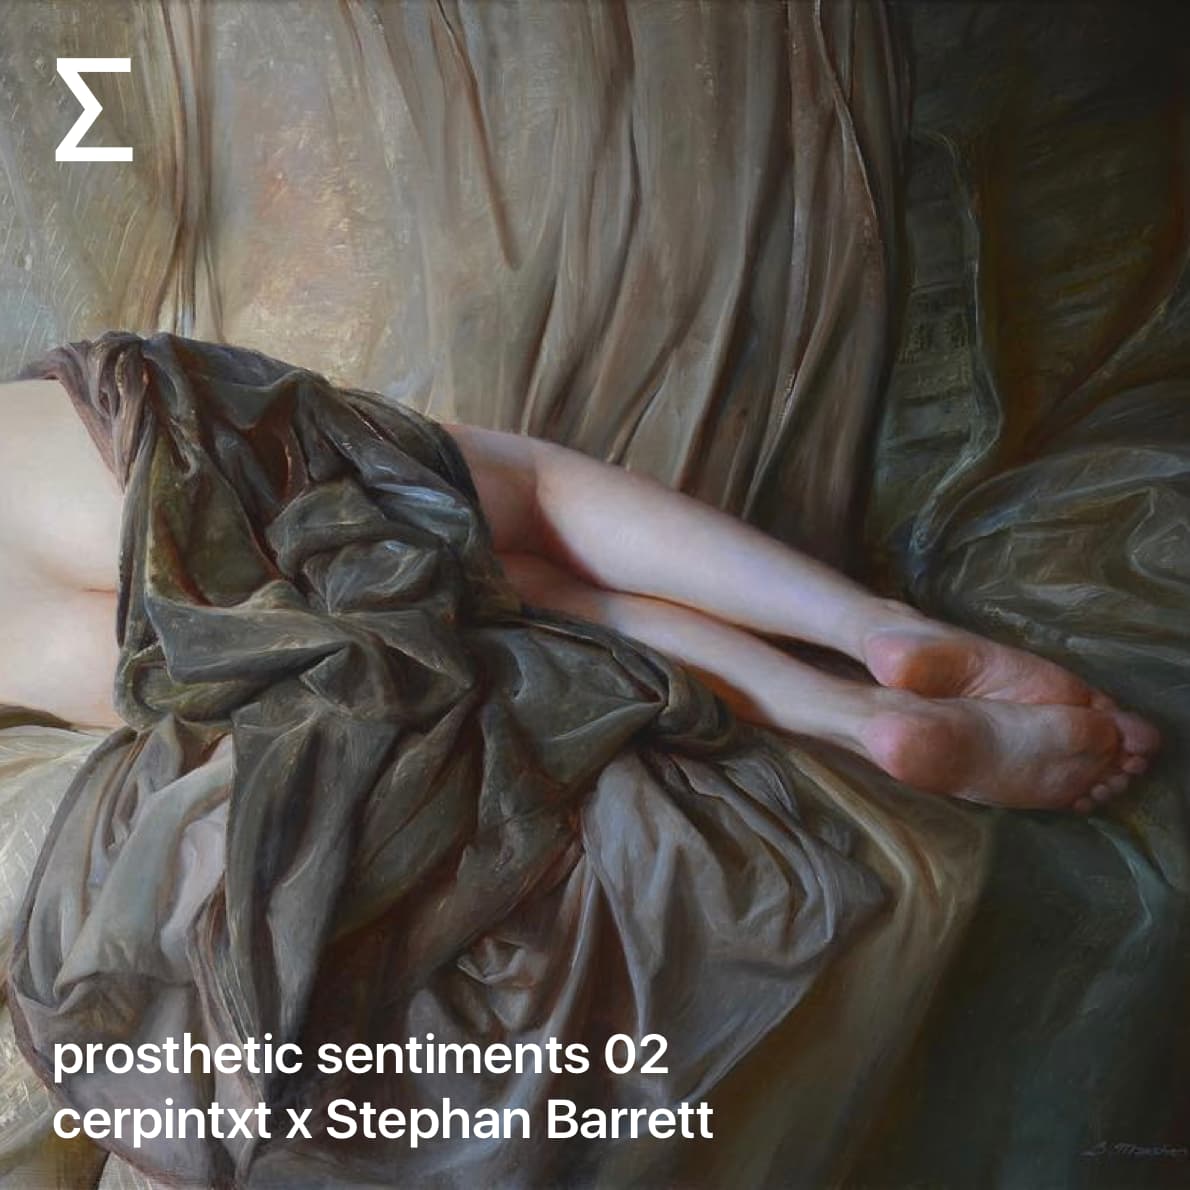 prosthetic sentiments 02 – cerpintxt x Stephan Barrett